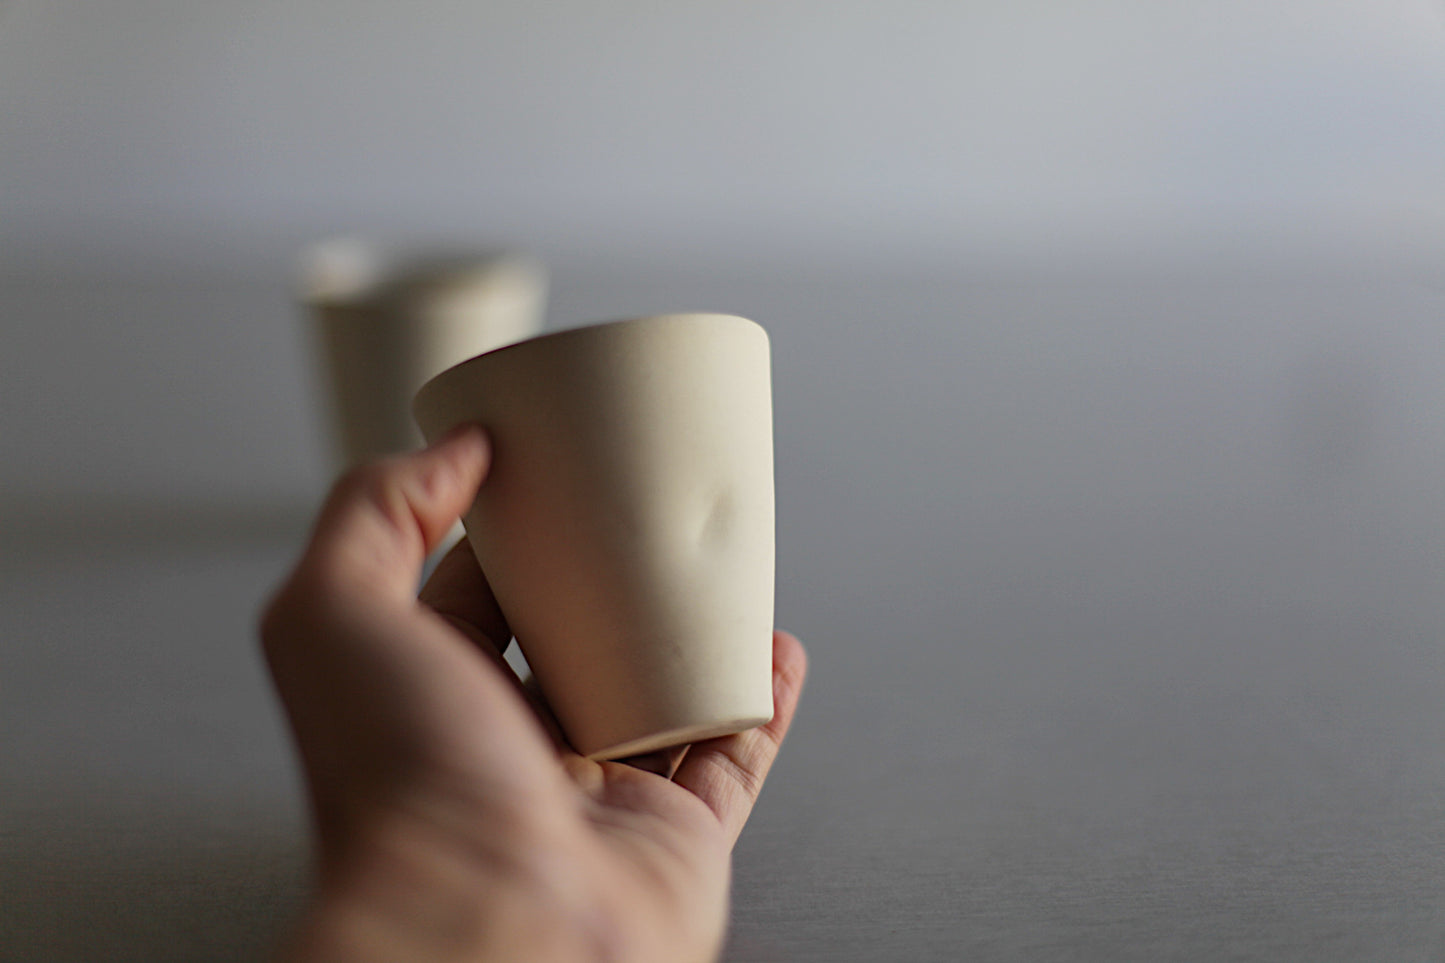 Tea set - fair cup with two tea cups, Sake set - stoneware